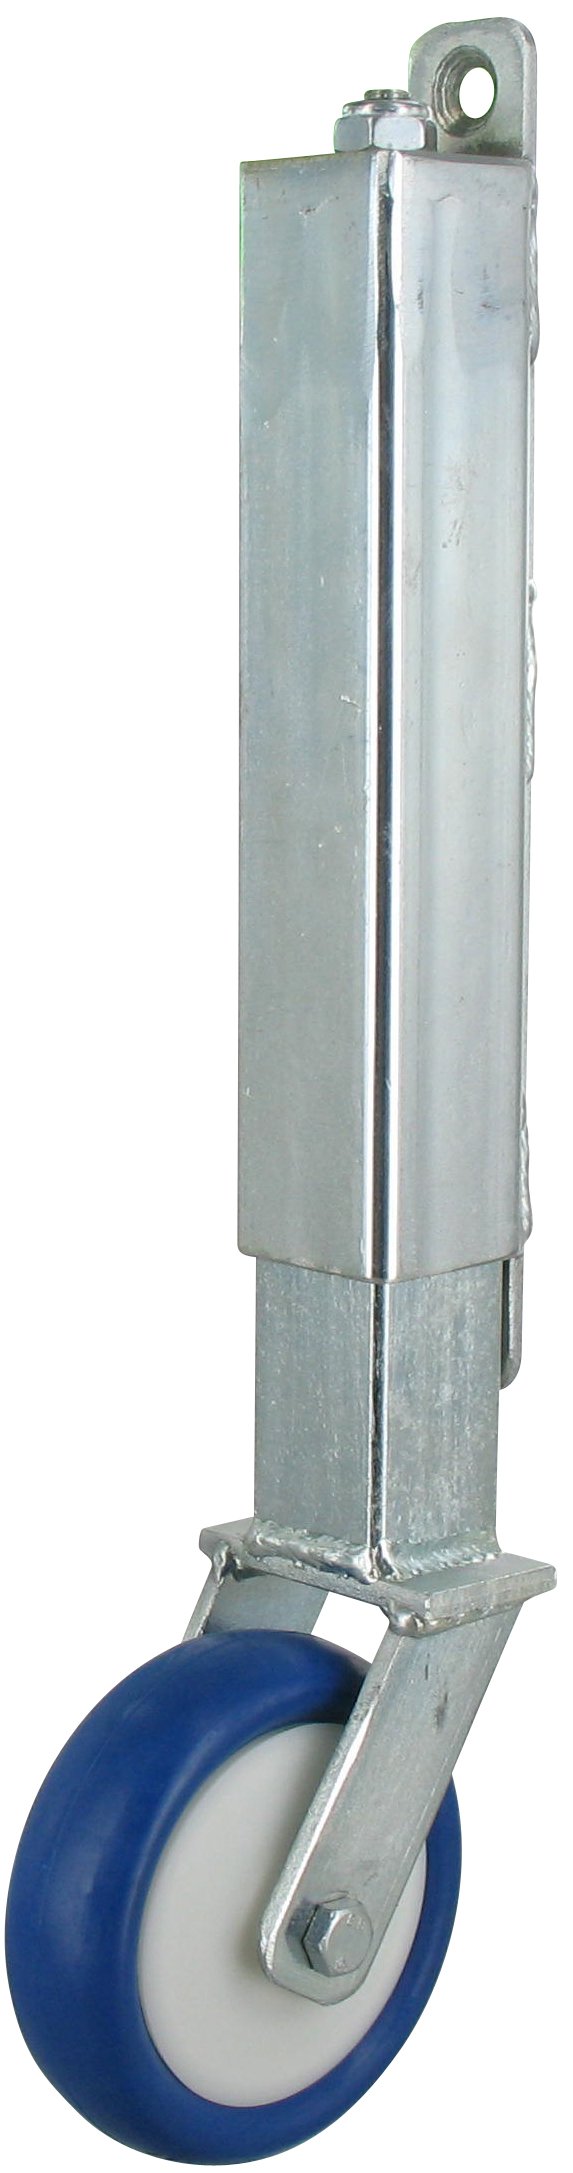 Torrolle PKF NBF Serie, Ø100x35mm, Stahl, geschweißt, blau, 70 KG Tragfähigkeit, 401034